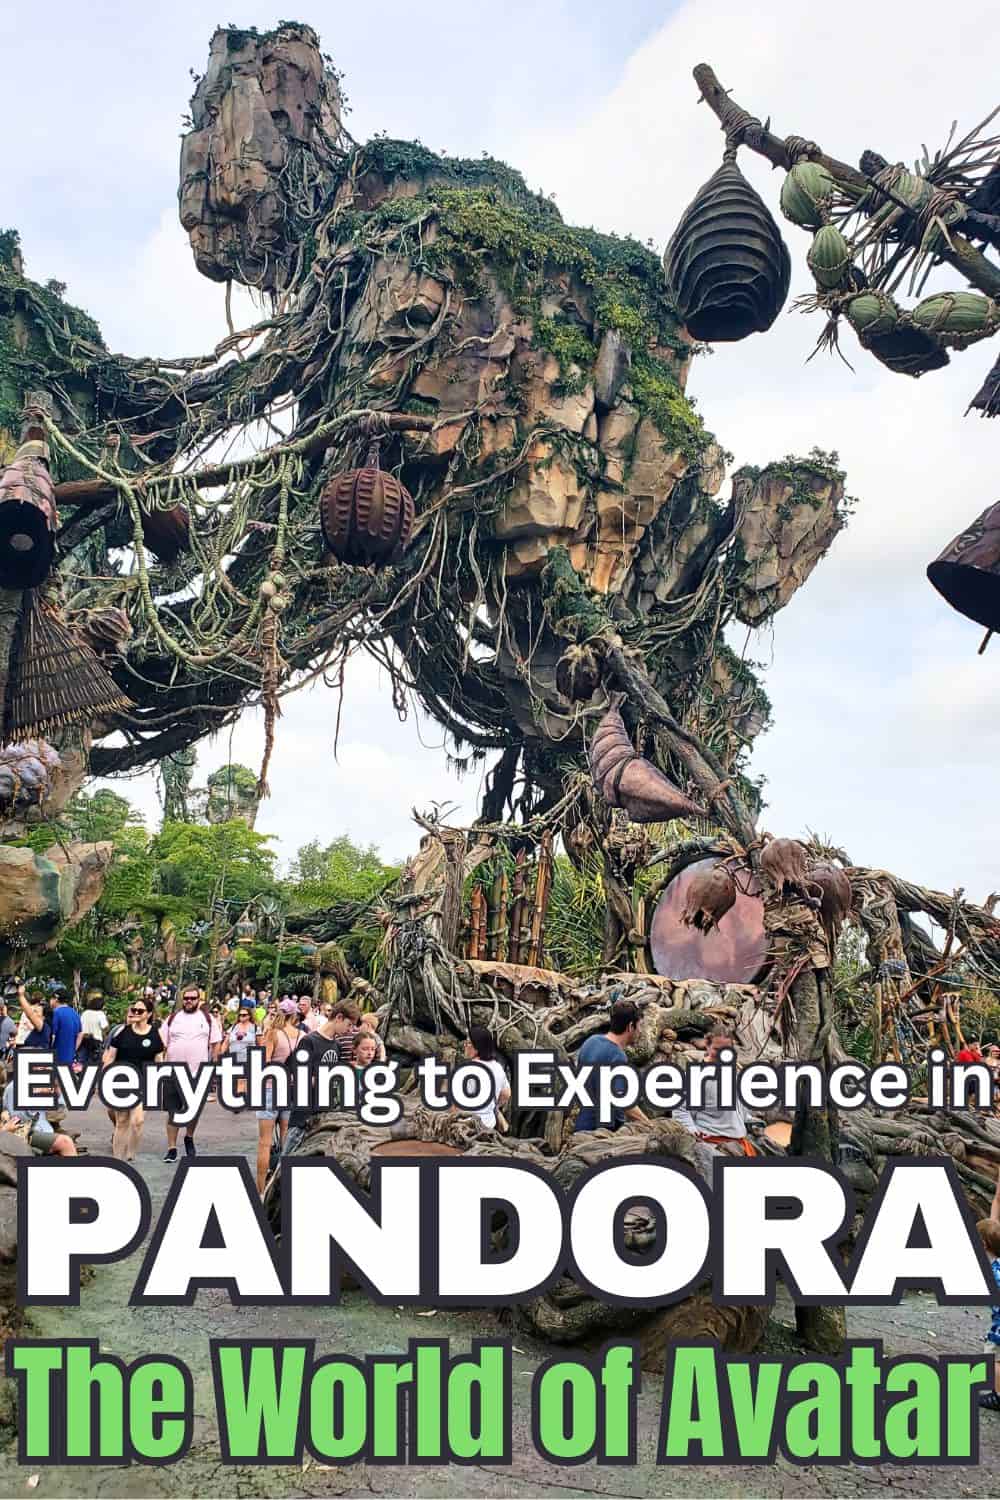 Pandora the World of Avatar